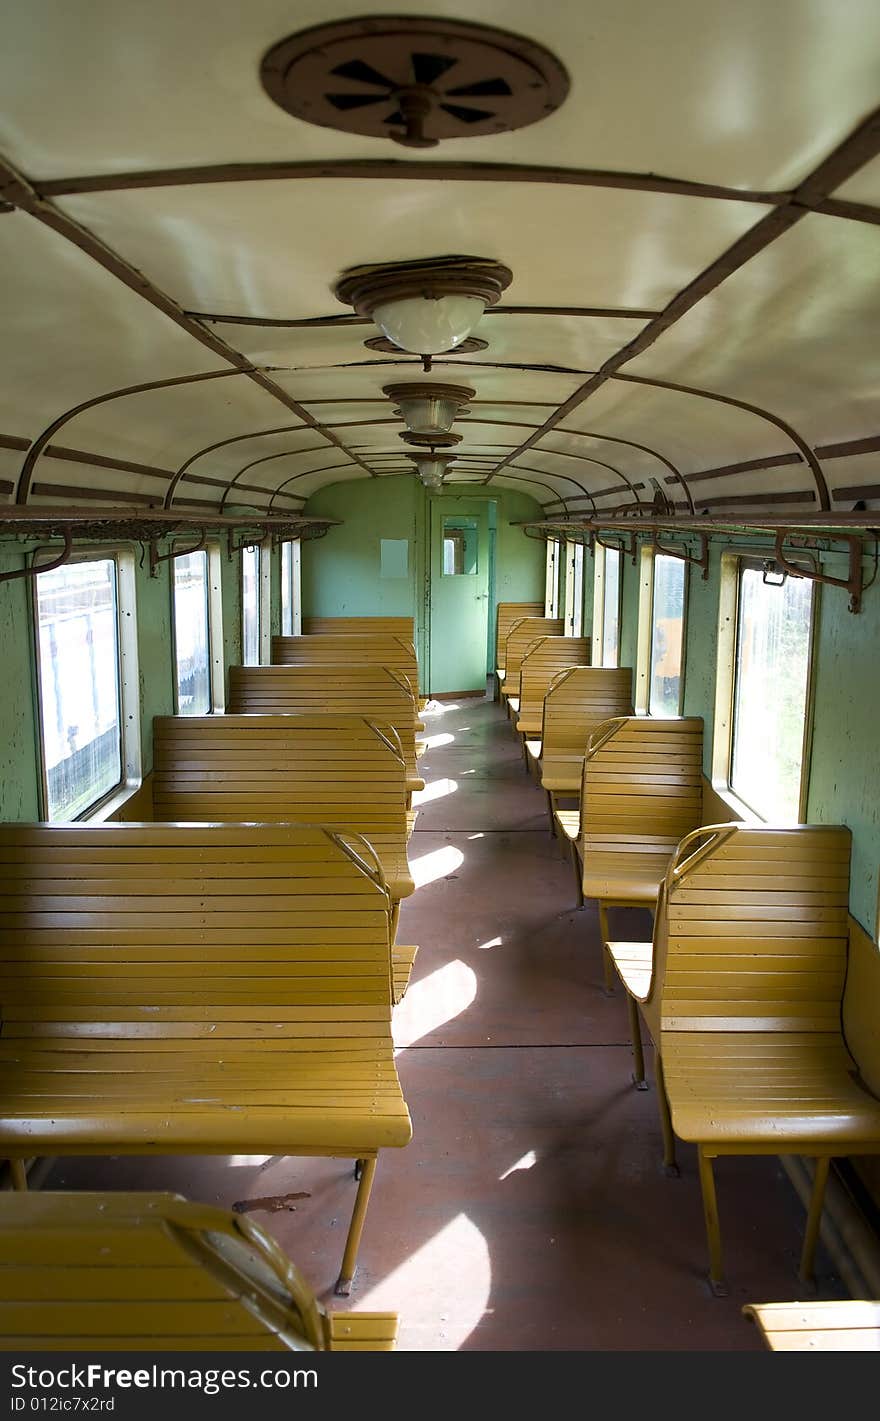 Old fashioned empty coach trains. Old fashioned empty coach trains